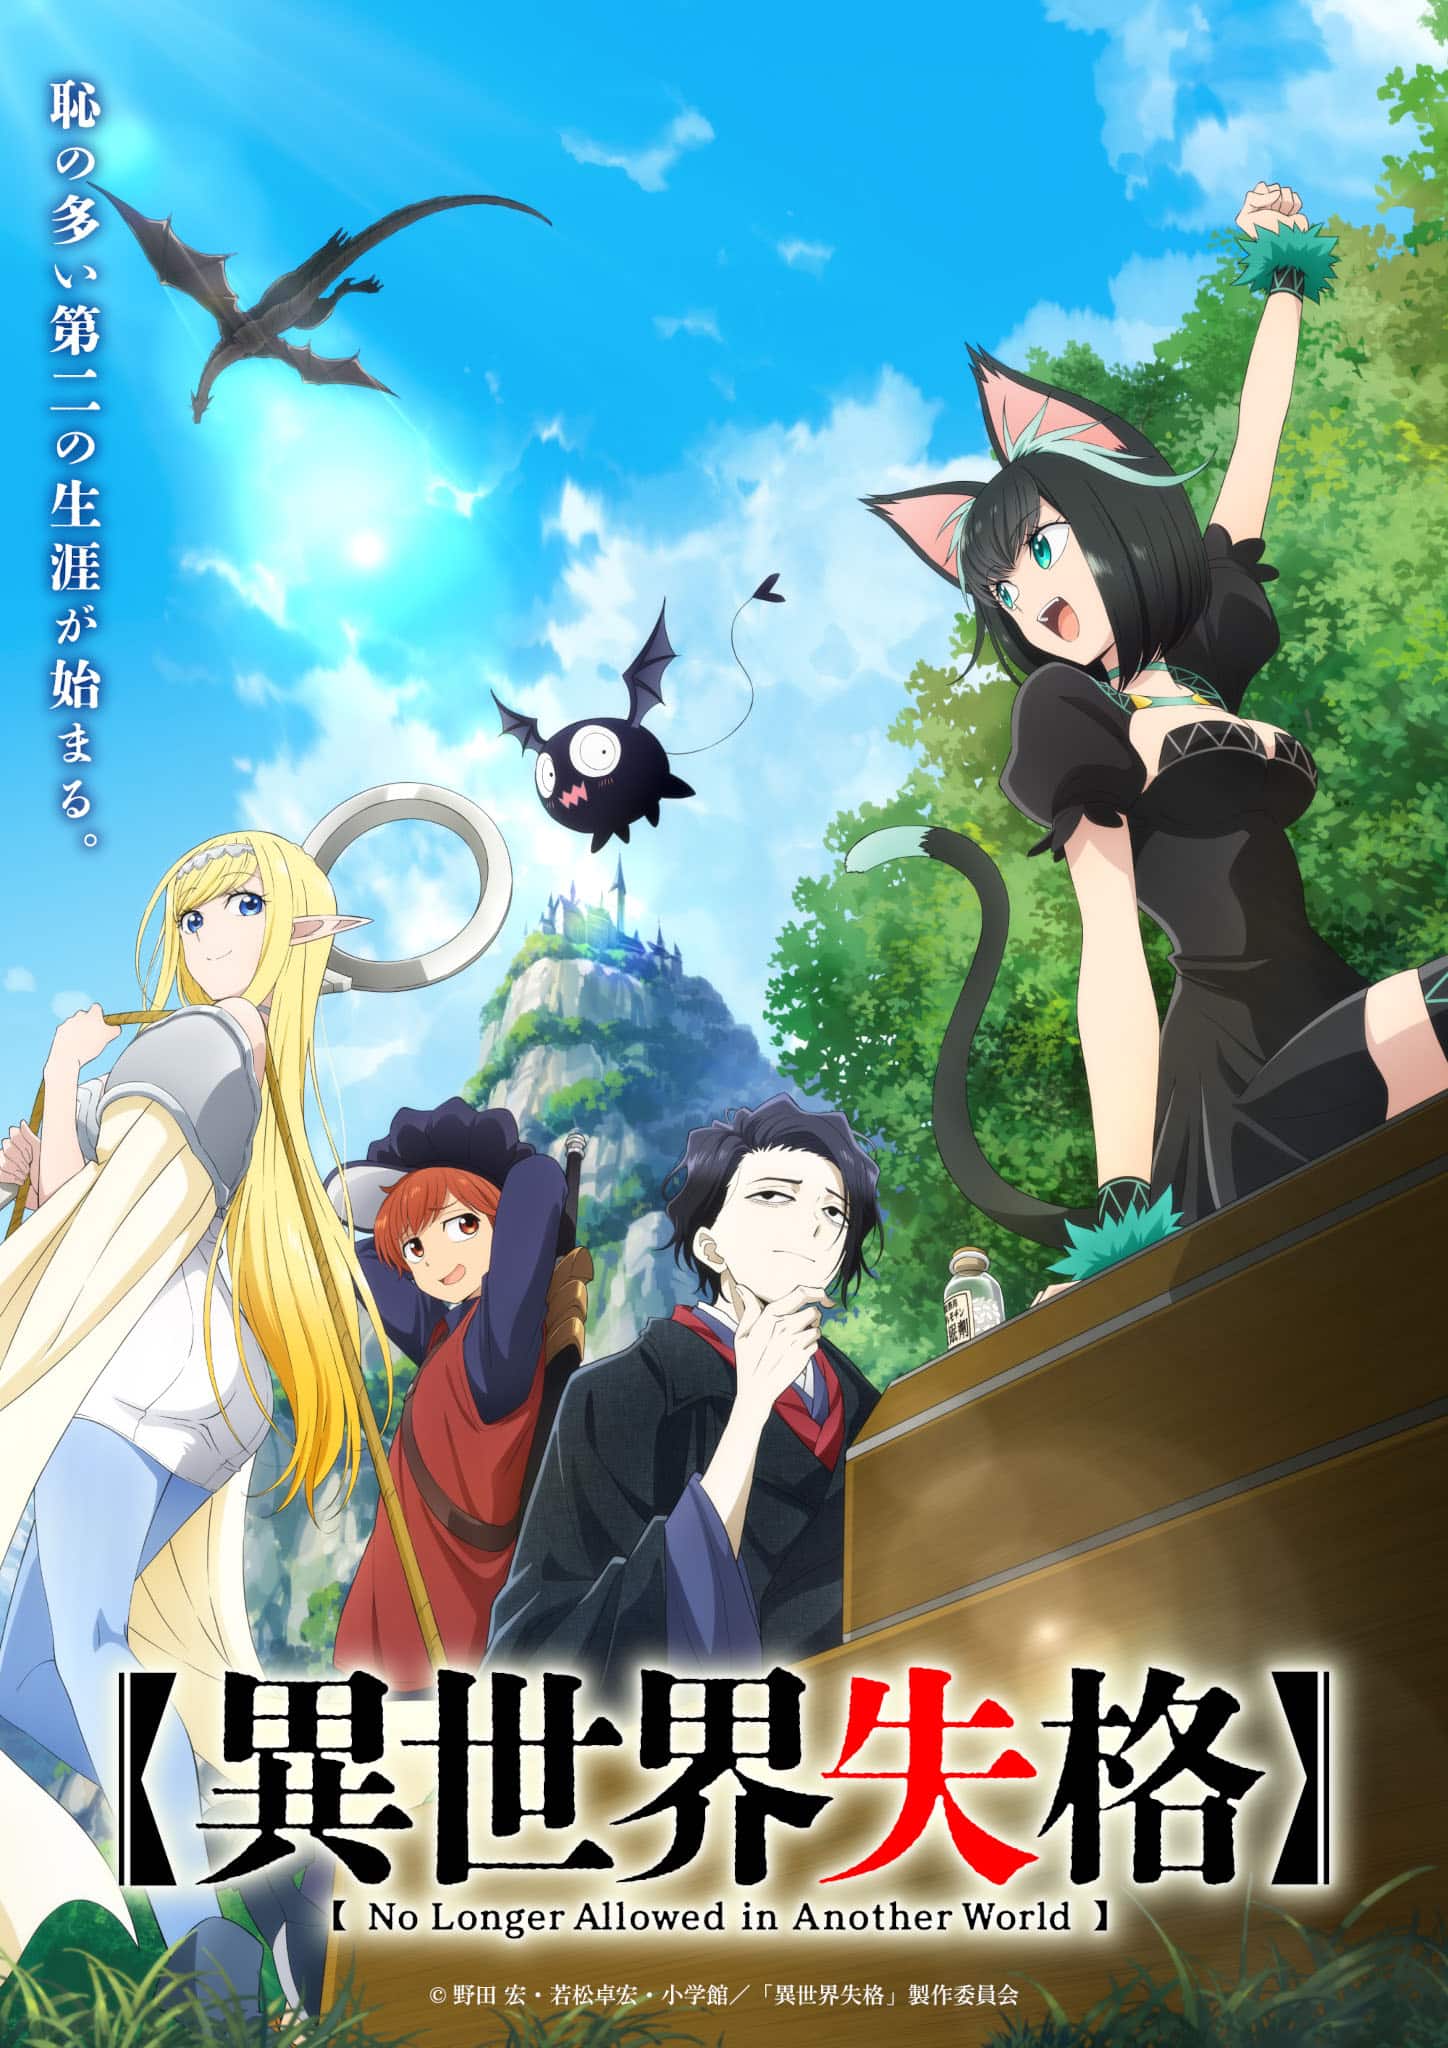 Second visuel pour l'anime Isekai Shikkaku (No Longer Allowed In Another World)